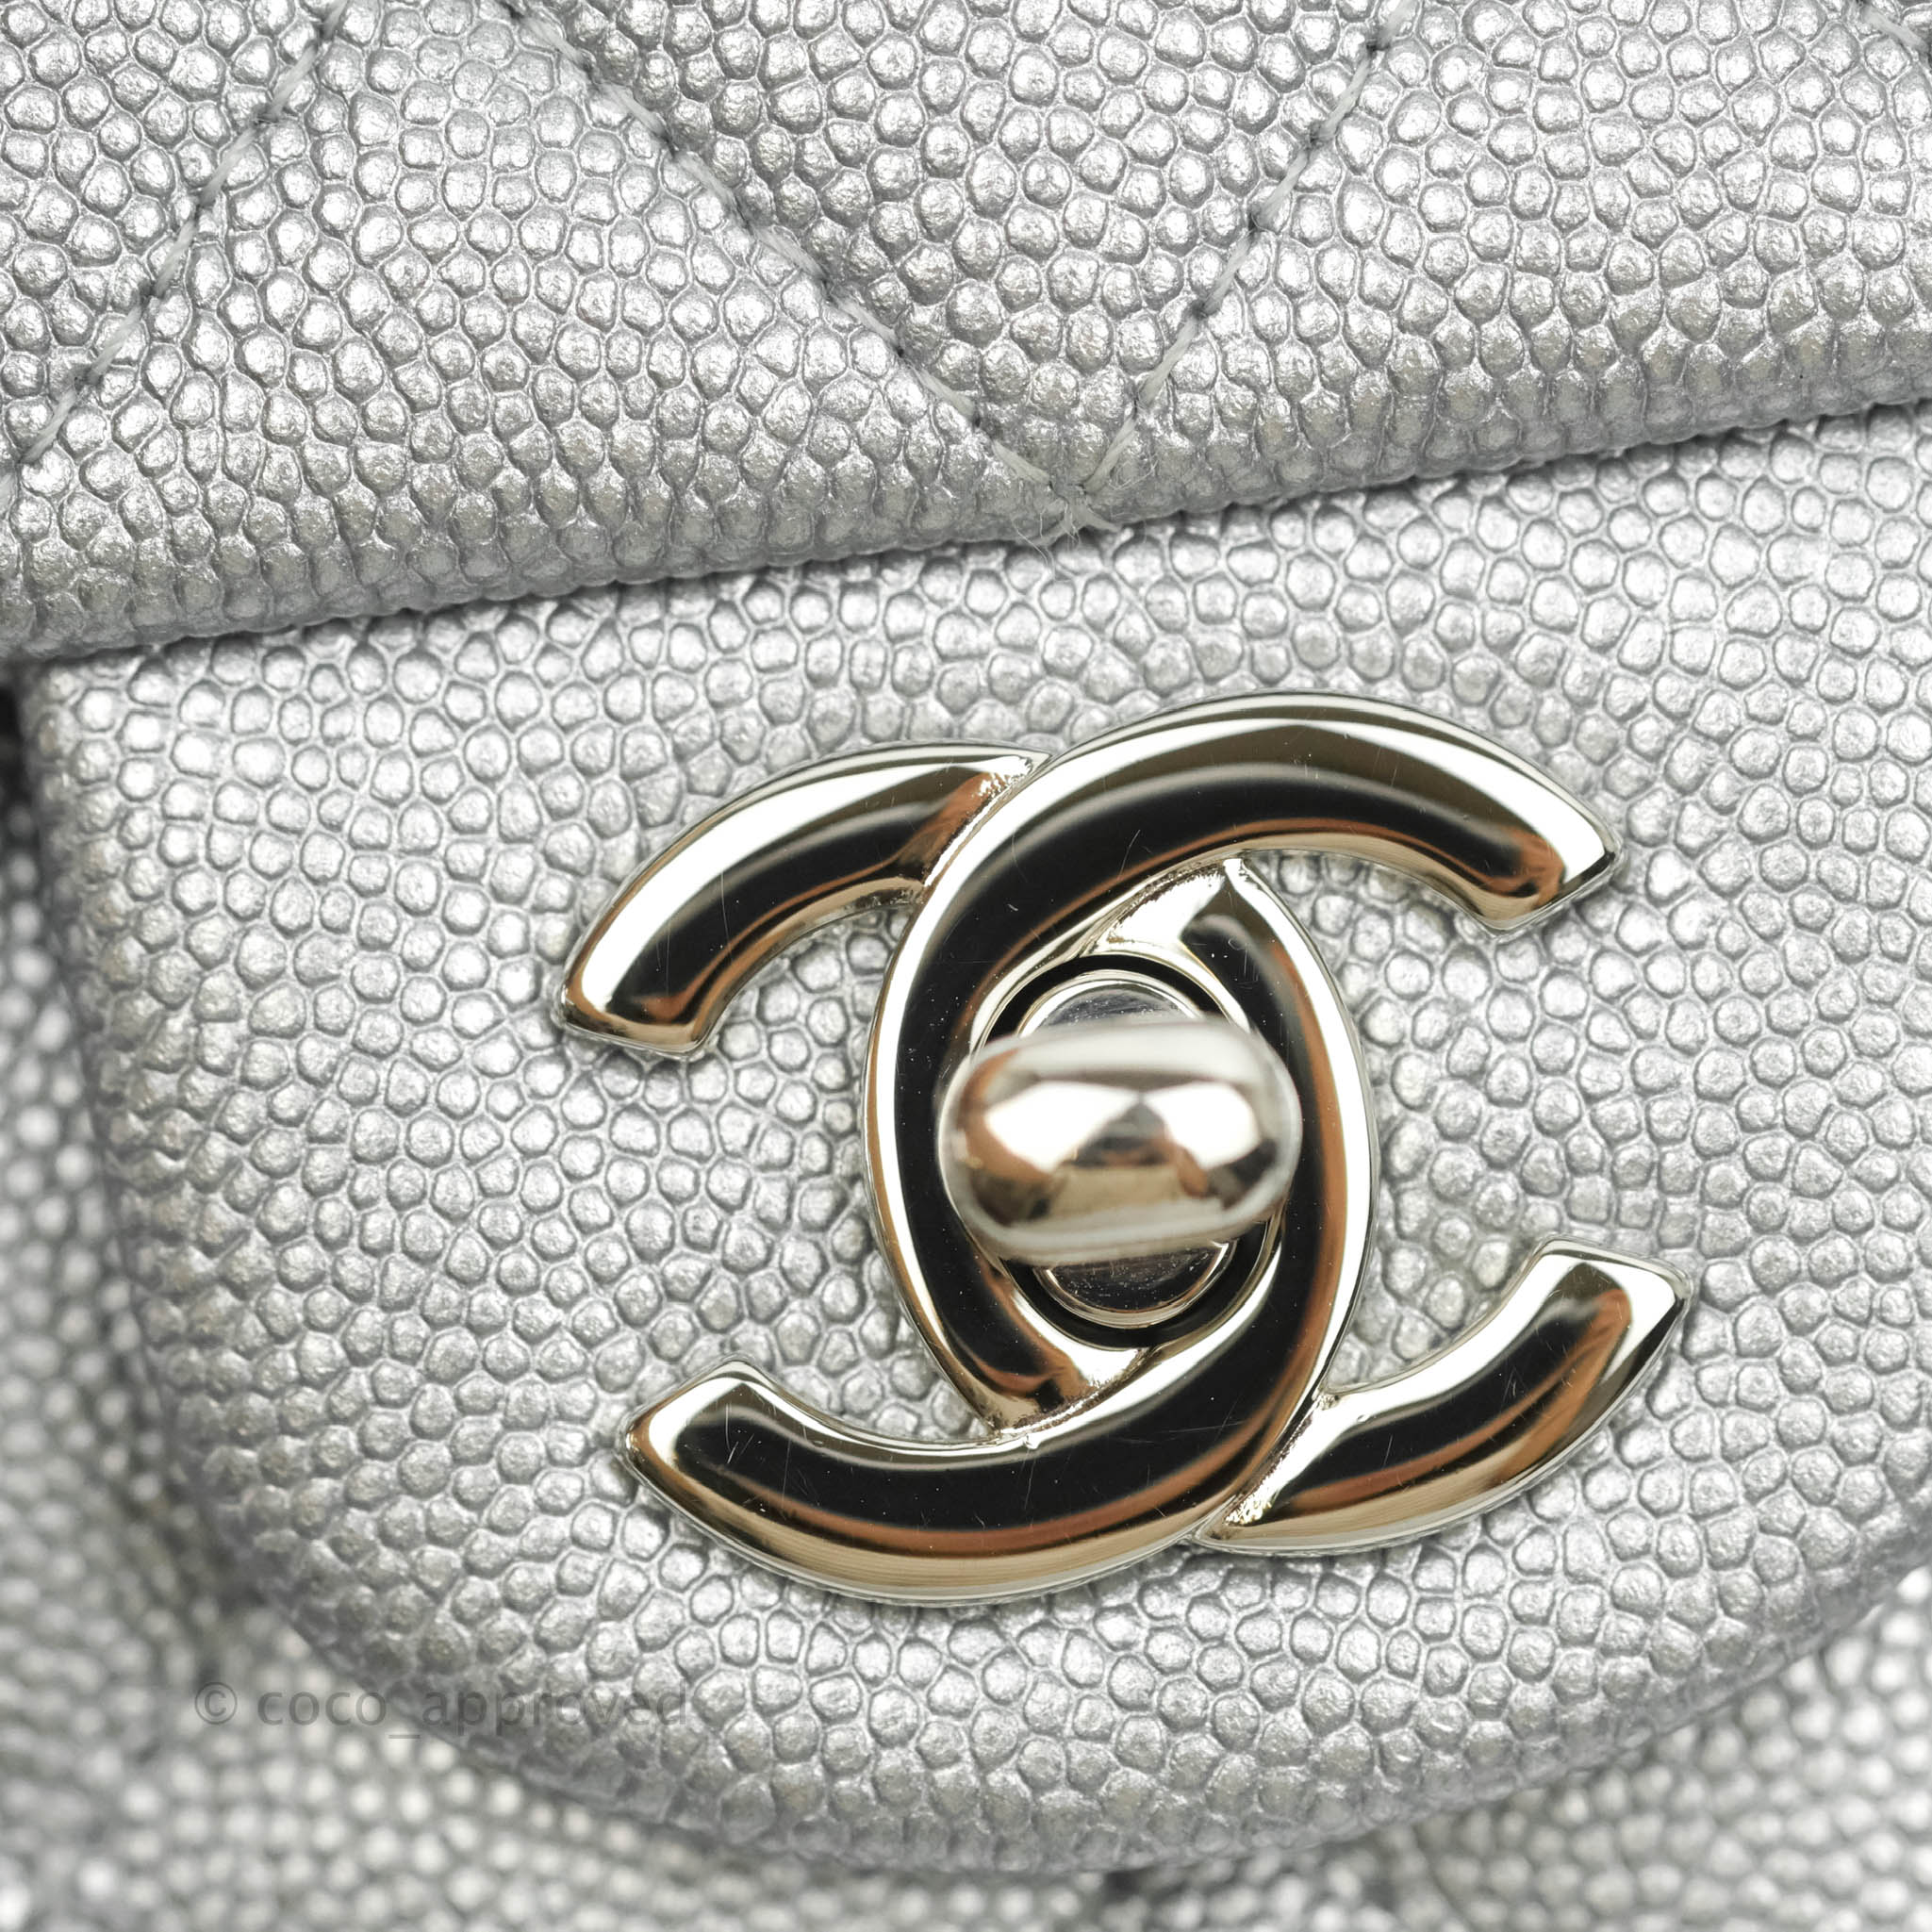 Chanel Classic Mini Rectangular Flap Blue Lambskin Silver Hardware 21S –  Coco Approved Studio